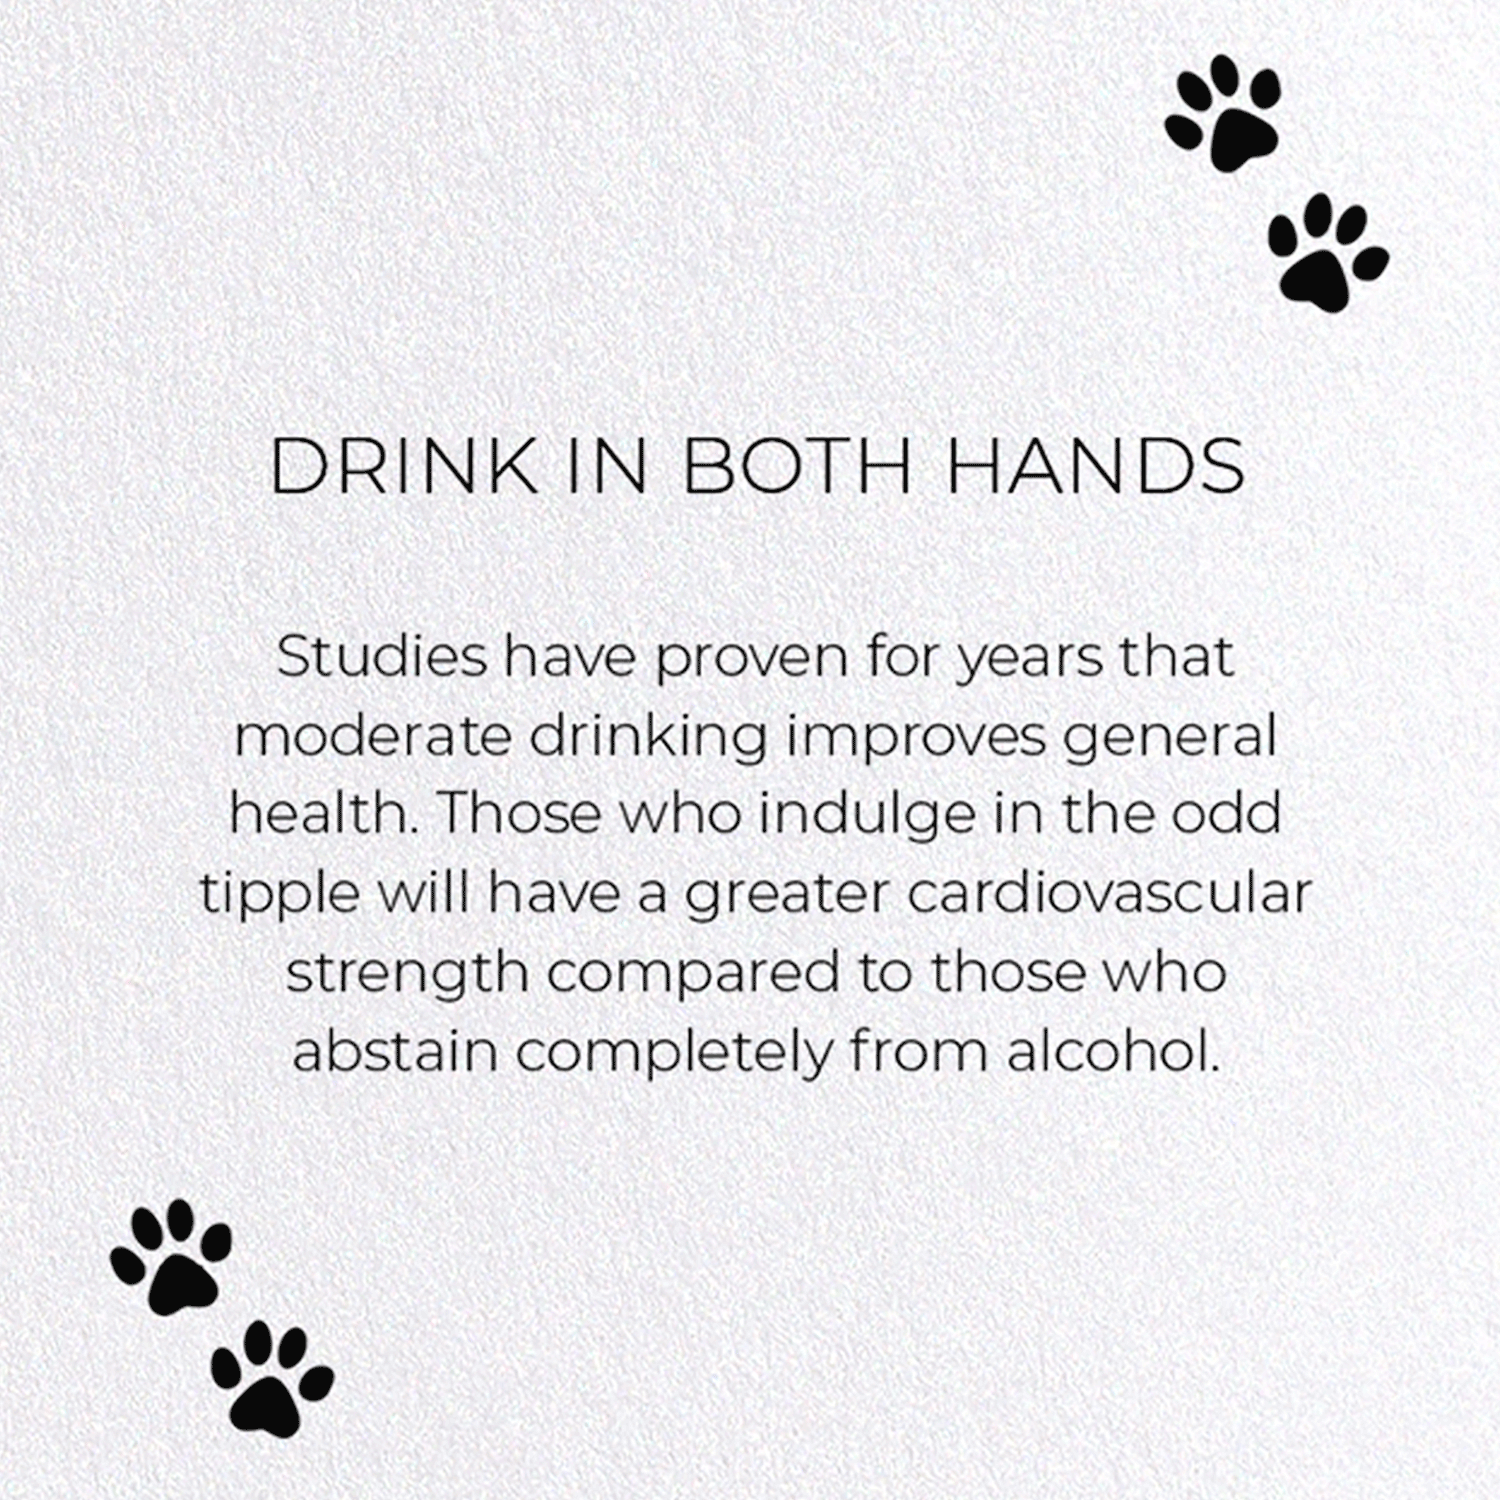 DRINK IN BOTH HANDS